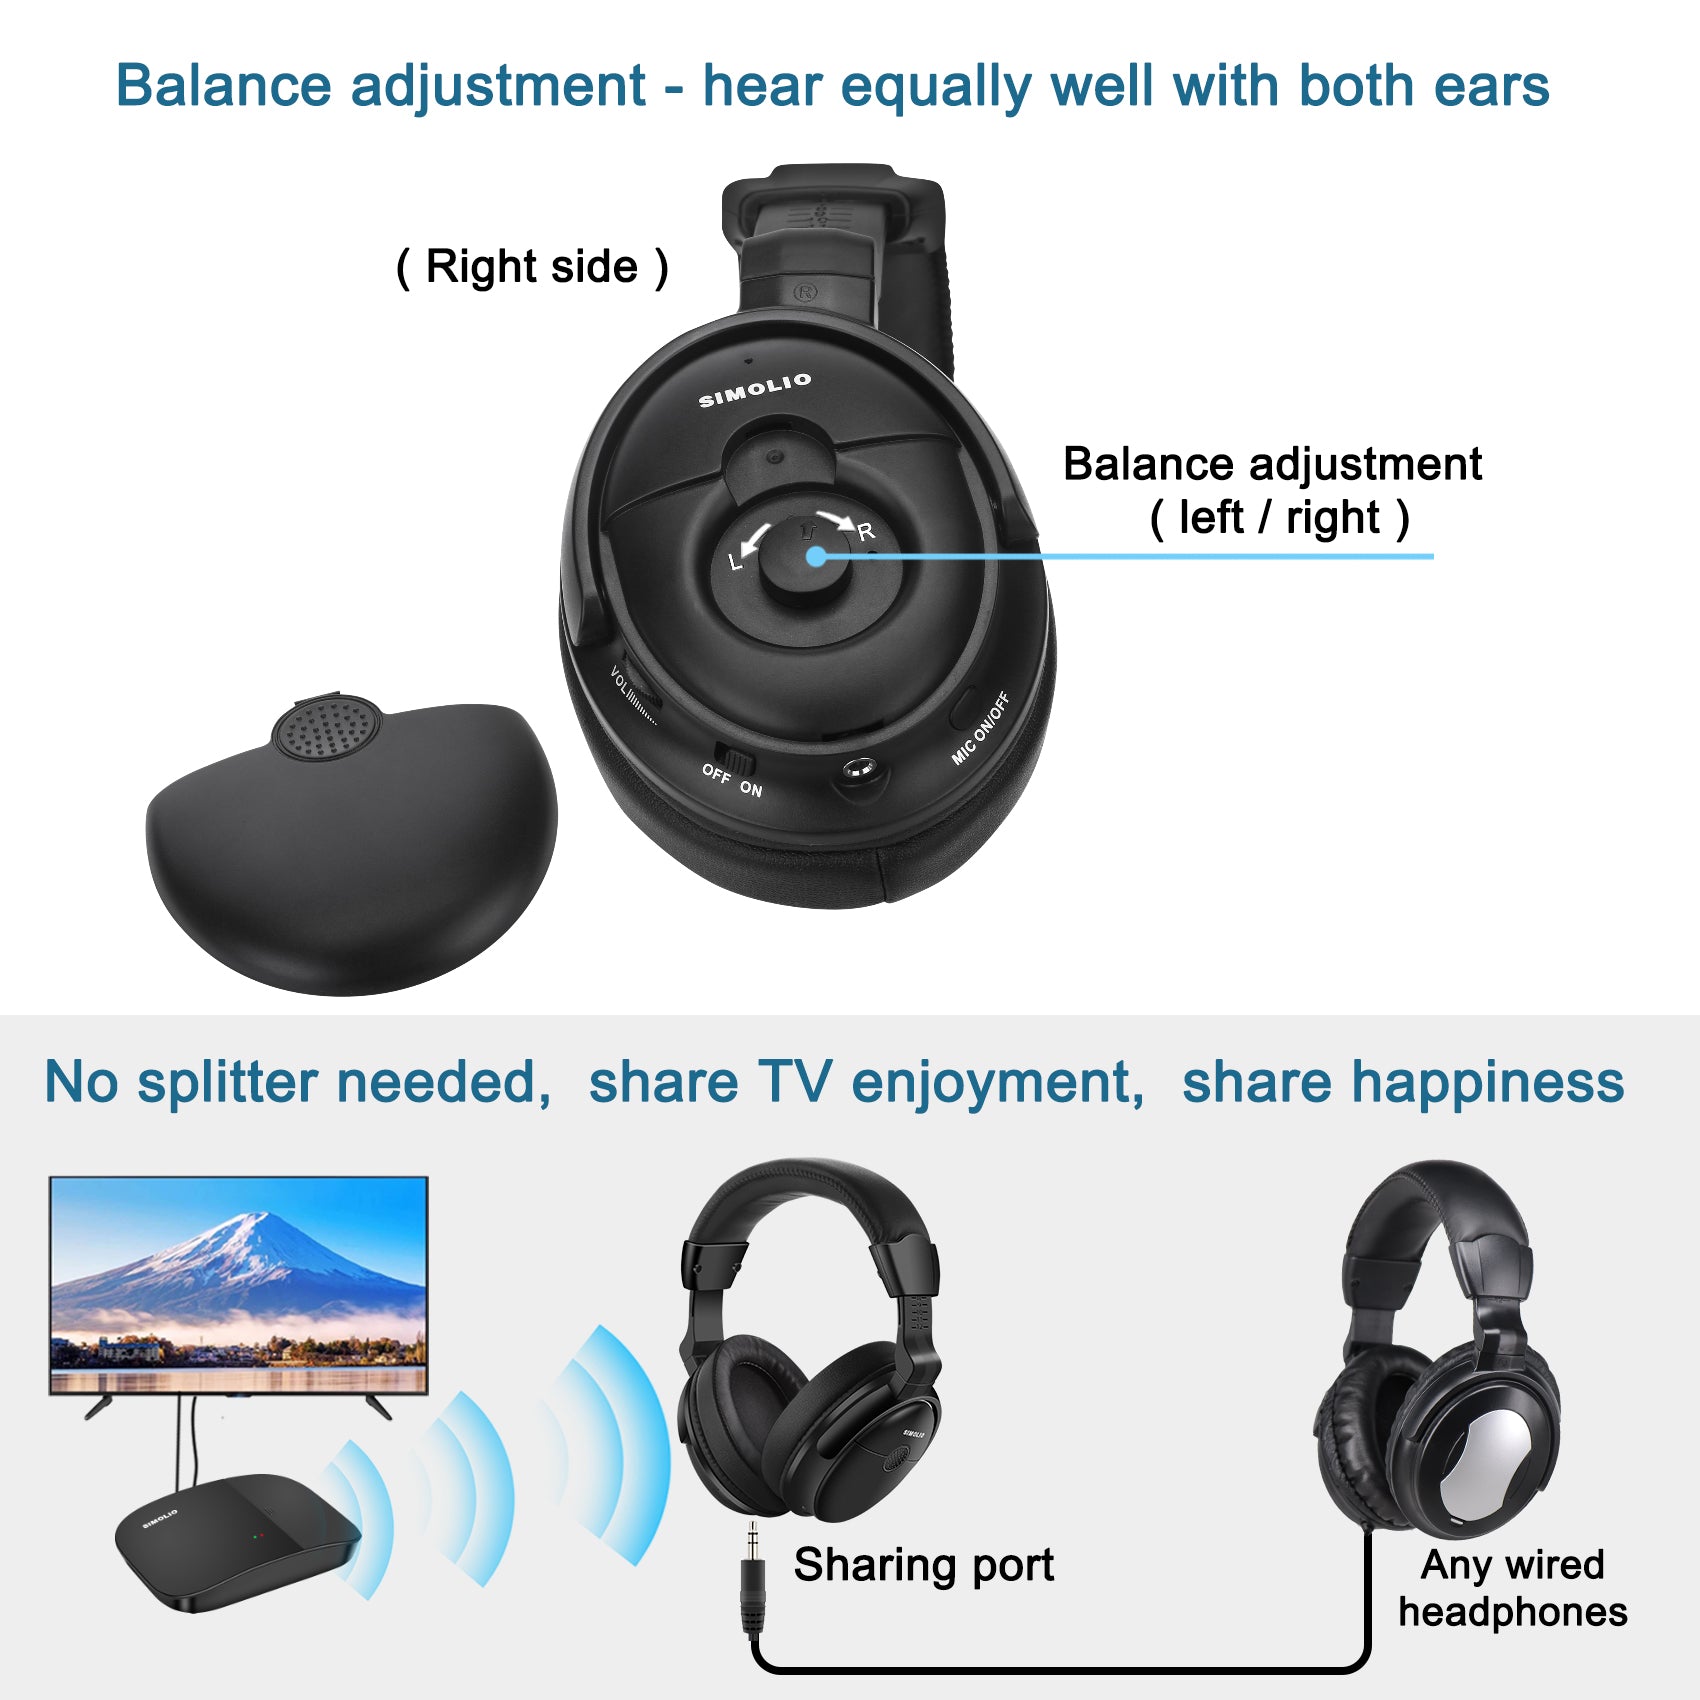 SIMOLIO-wireless-tv-headphones-for-seniors-and-hard-of-hearing-SM-825DPRO-balance-control